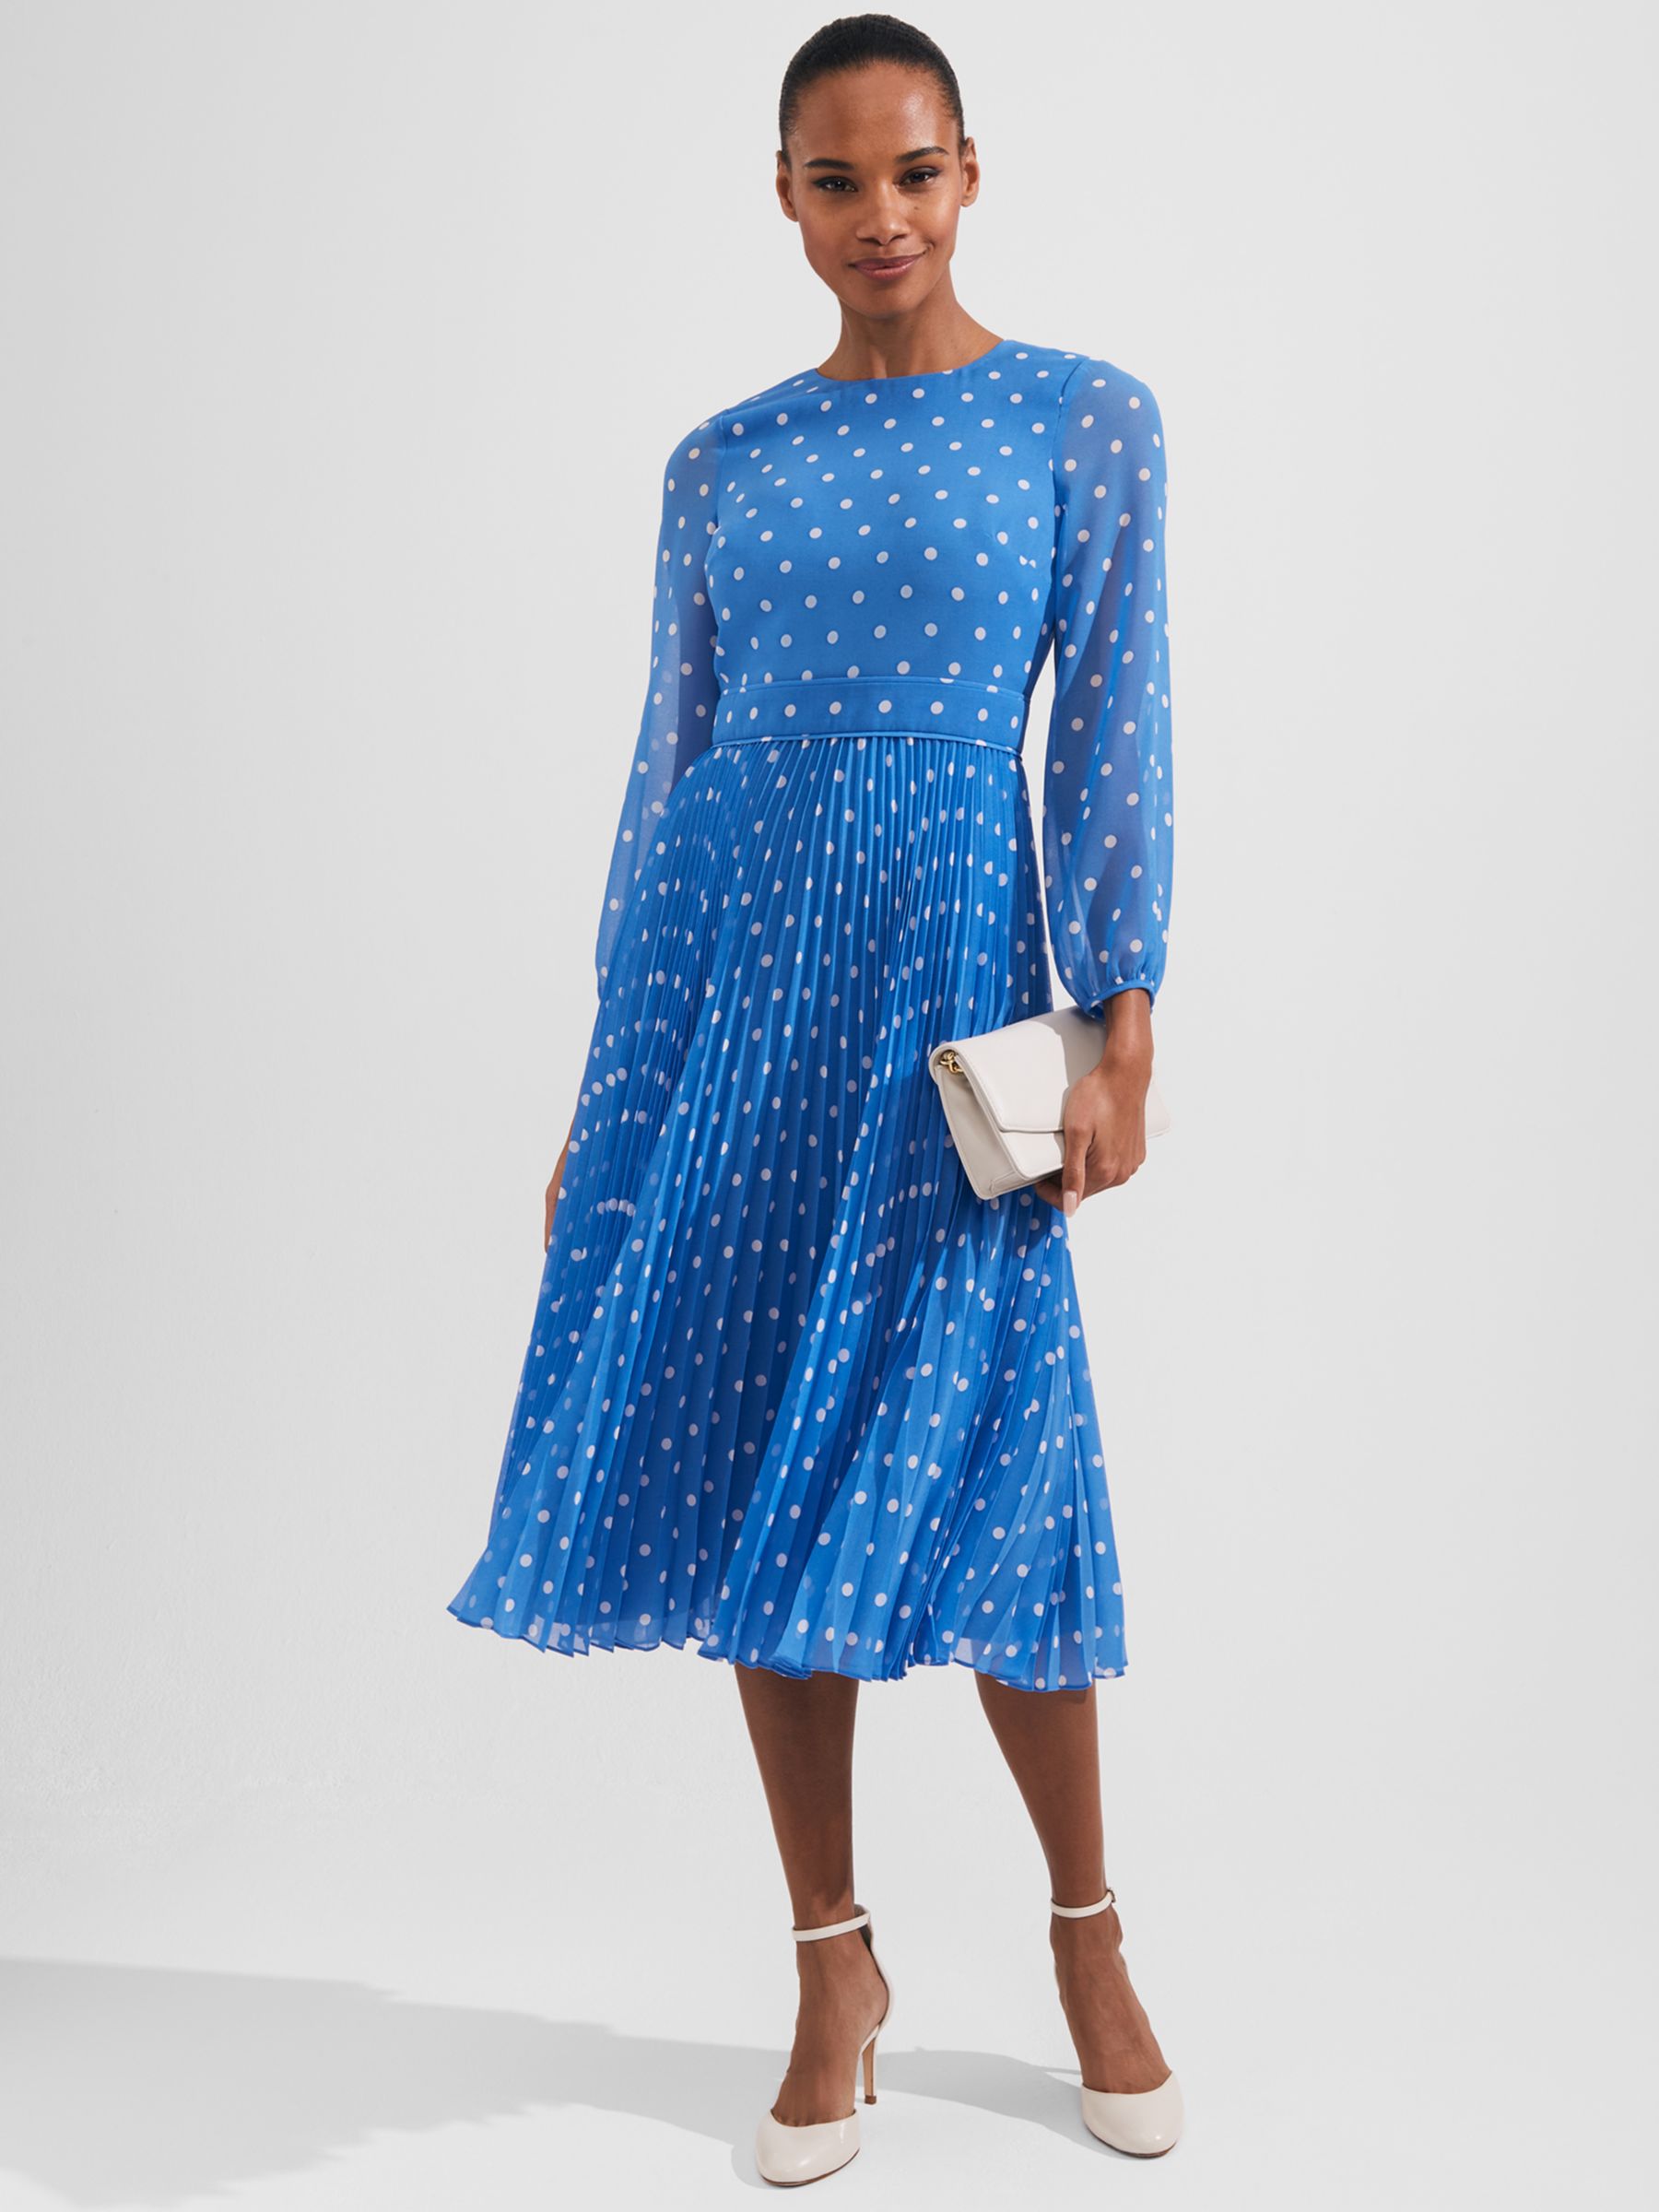 Hobbs Selena Polka Dot Pleated Dress, Blue/Ivory at John Lewis & Partners